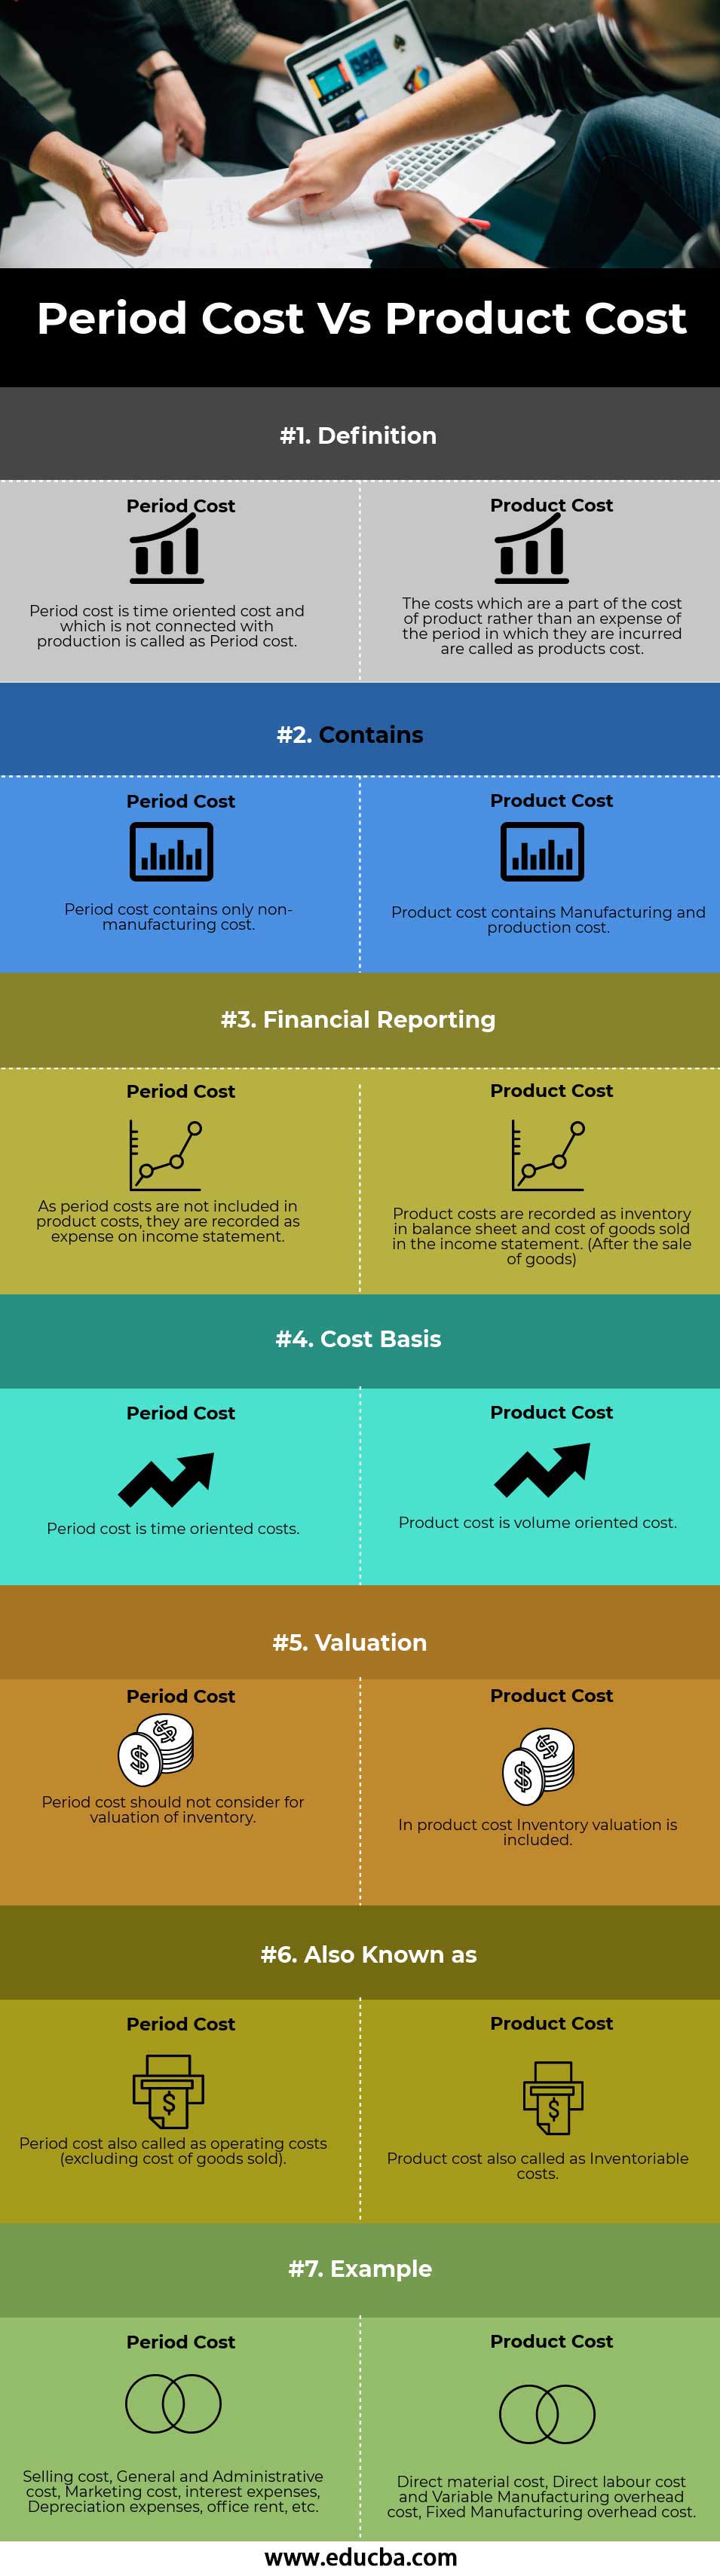 Period Cost Vs Product Cost info